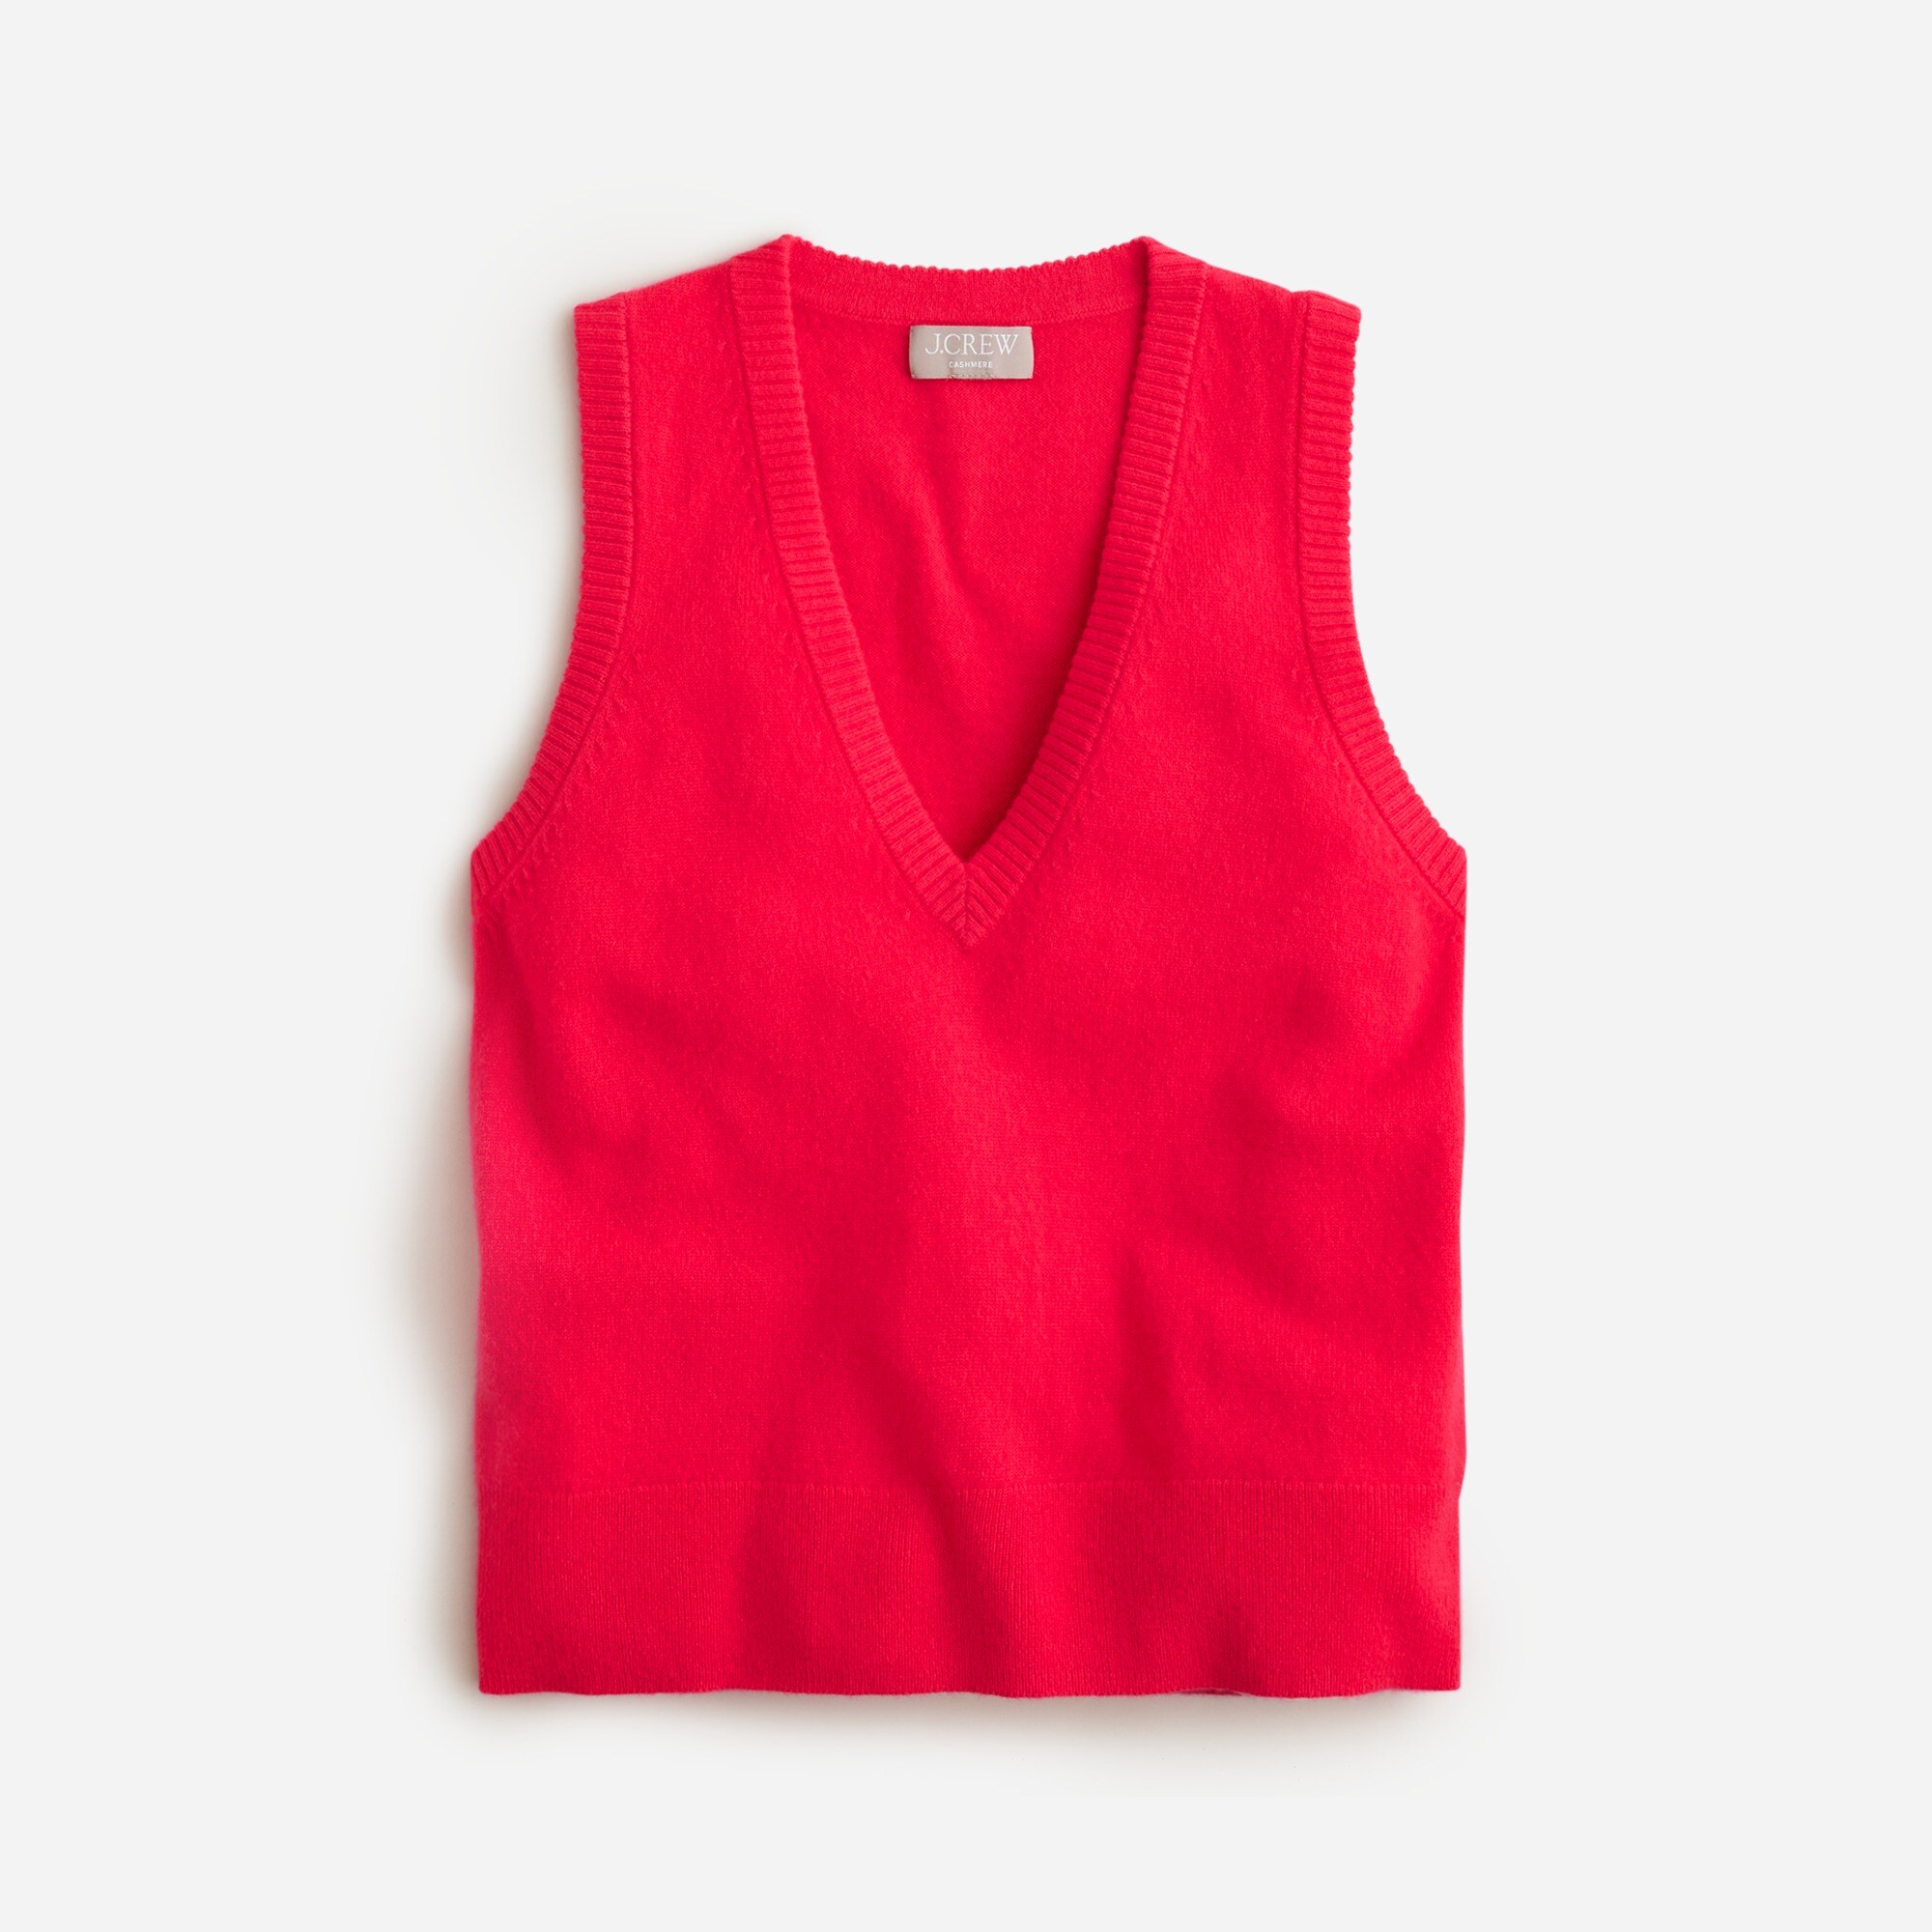  Cashmere V-neck sweater-vest